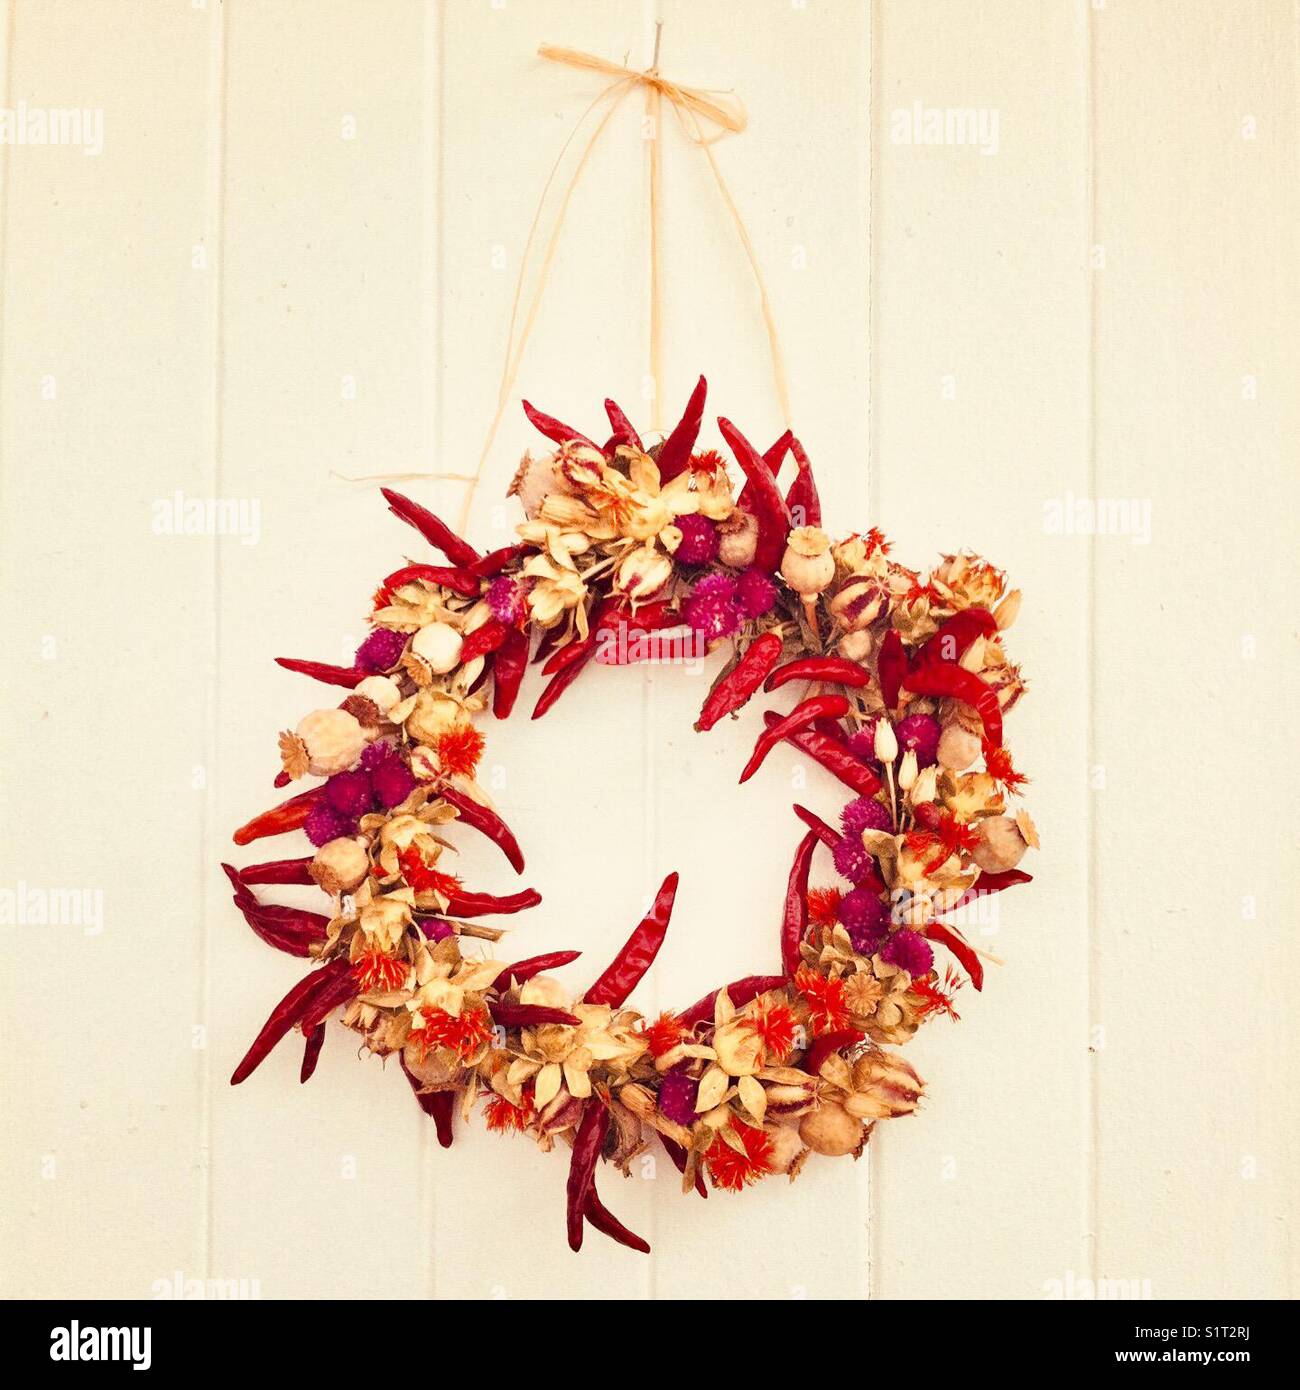 Handmade red pepper wreath Stock Photo